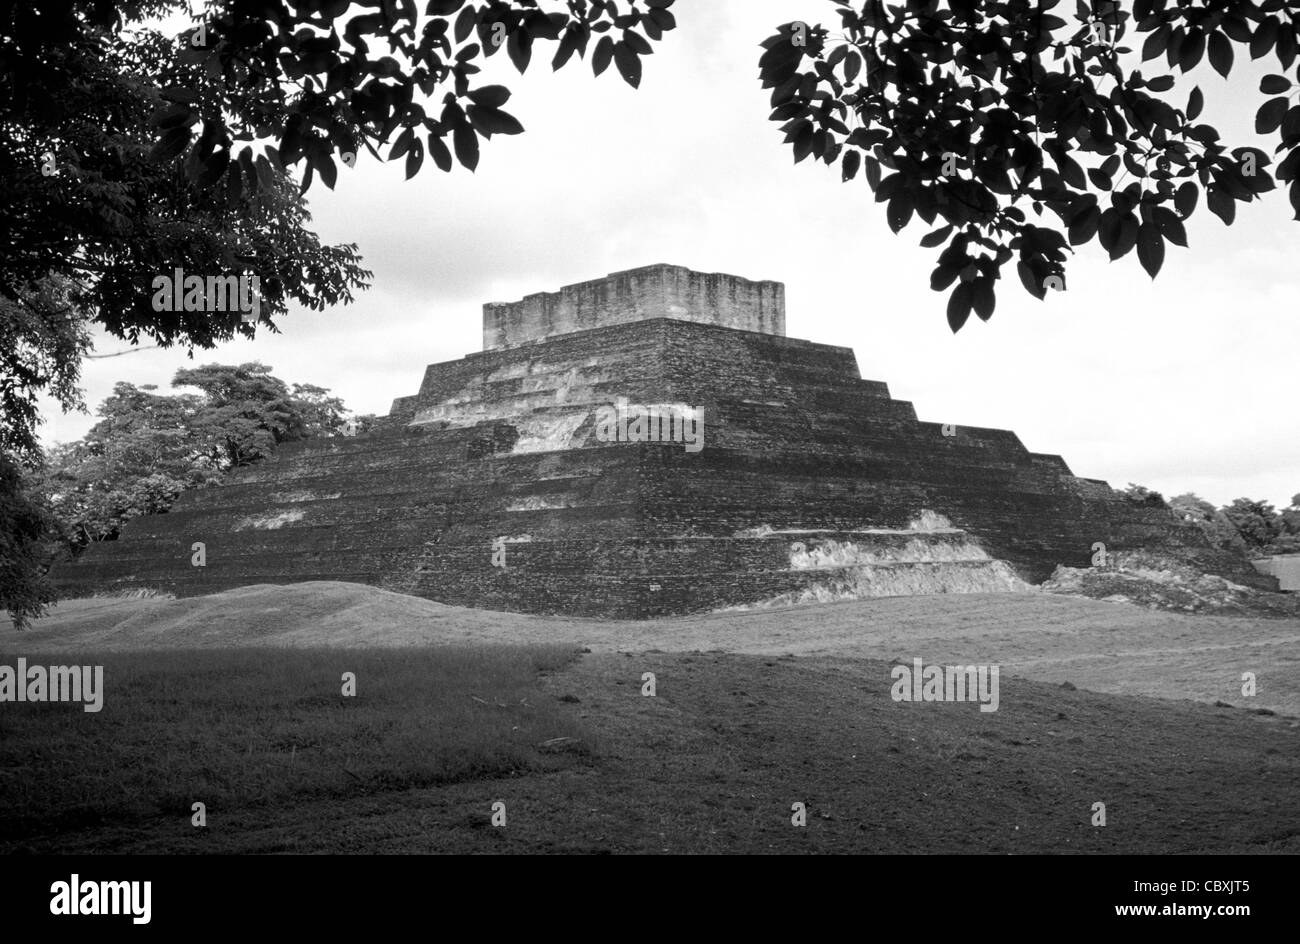 One of the unusual pyramids made of kilned bricks at the Mayan ruins of Comalcalco, Tabasco, Mexico. Stock Photo